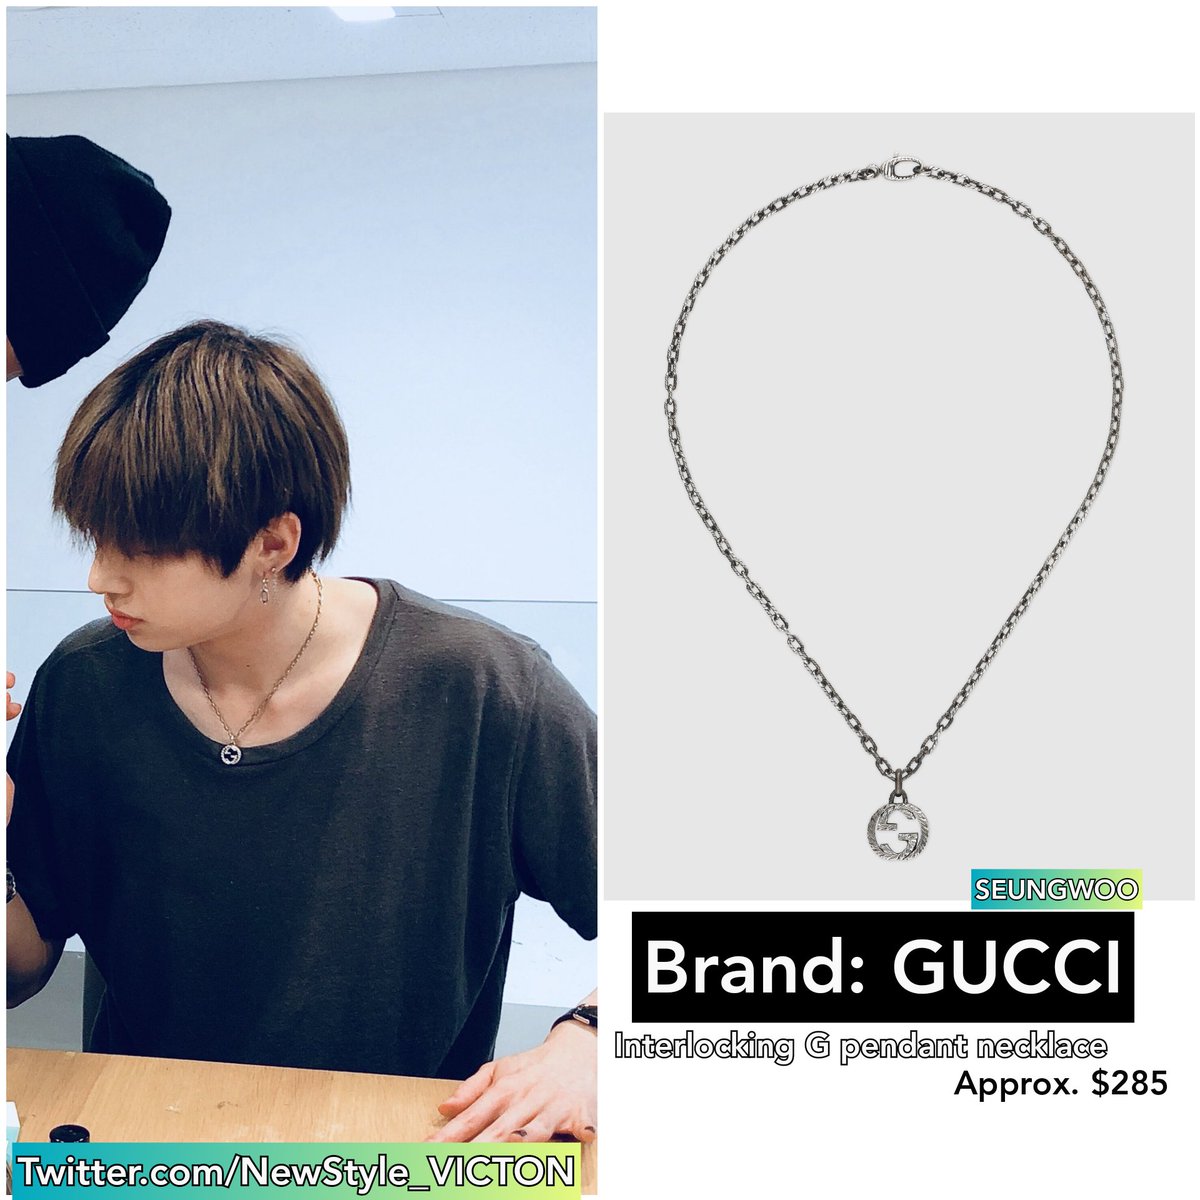 gucci interlocking g pendant necklace